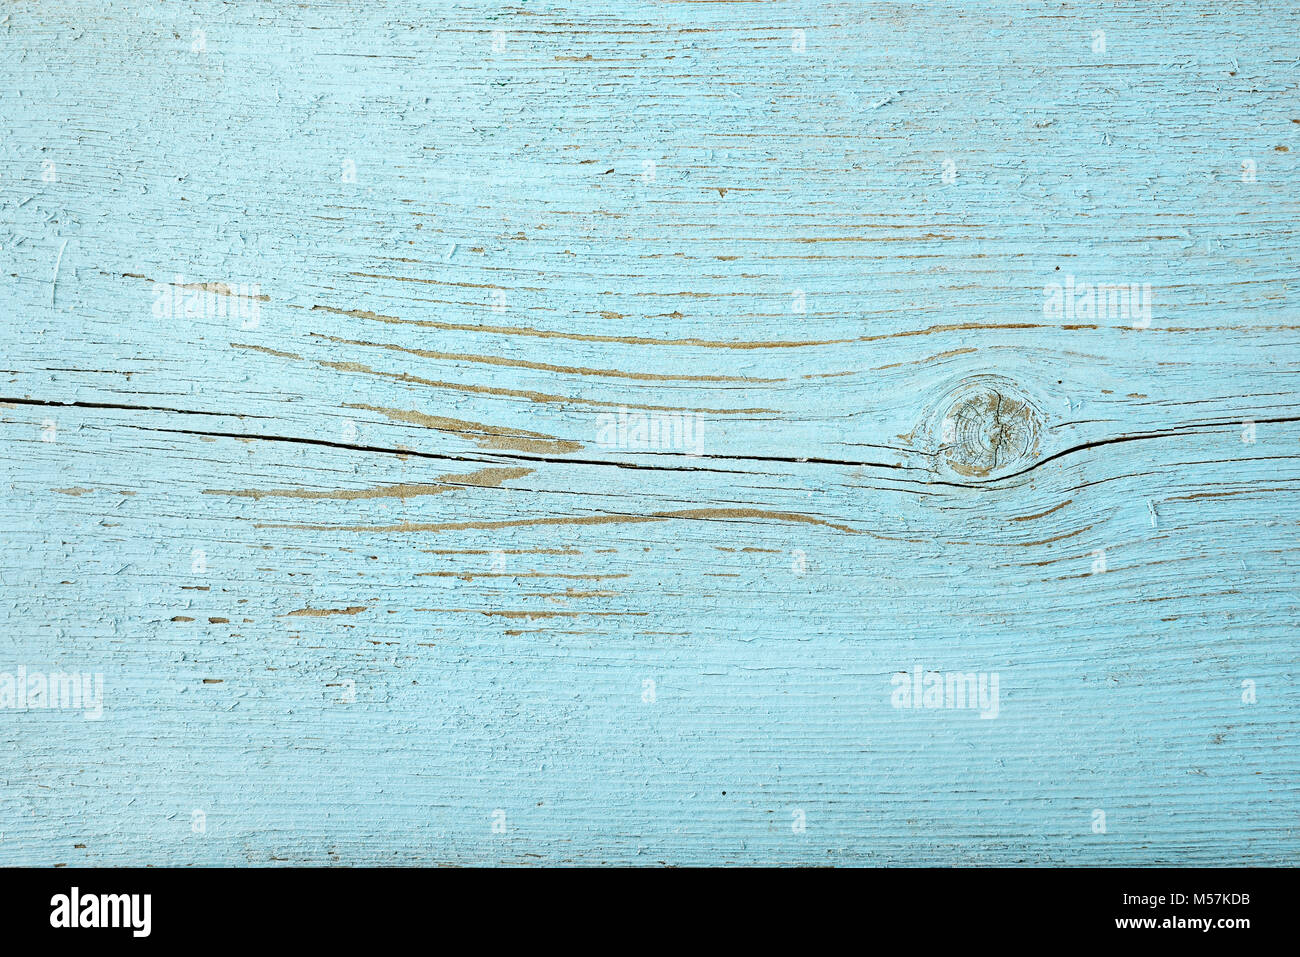 La texture de fond en bois. Anciennes cartes peintes en bleu de la peinture. Vue d'en haut. Banque D'Images